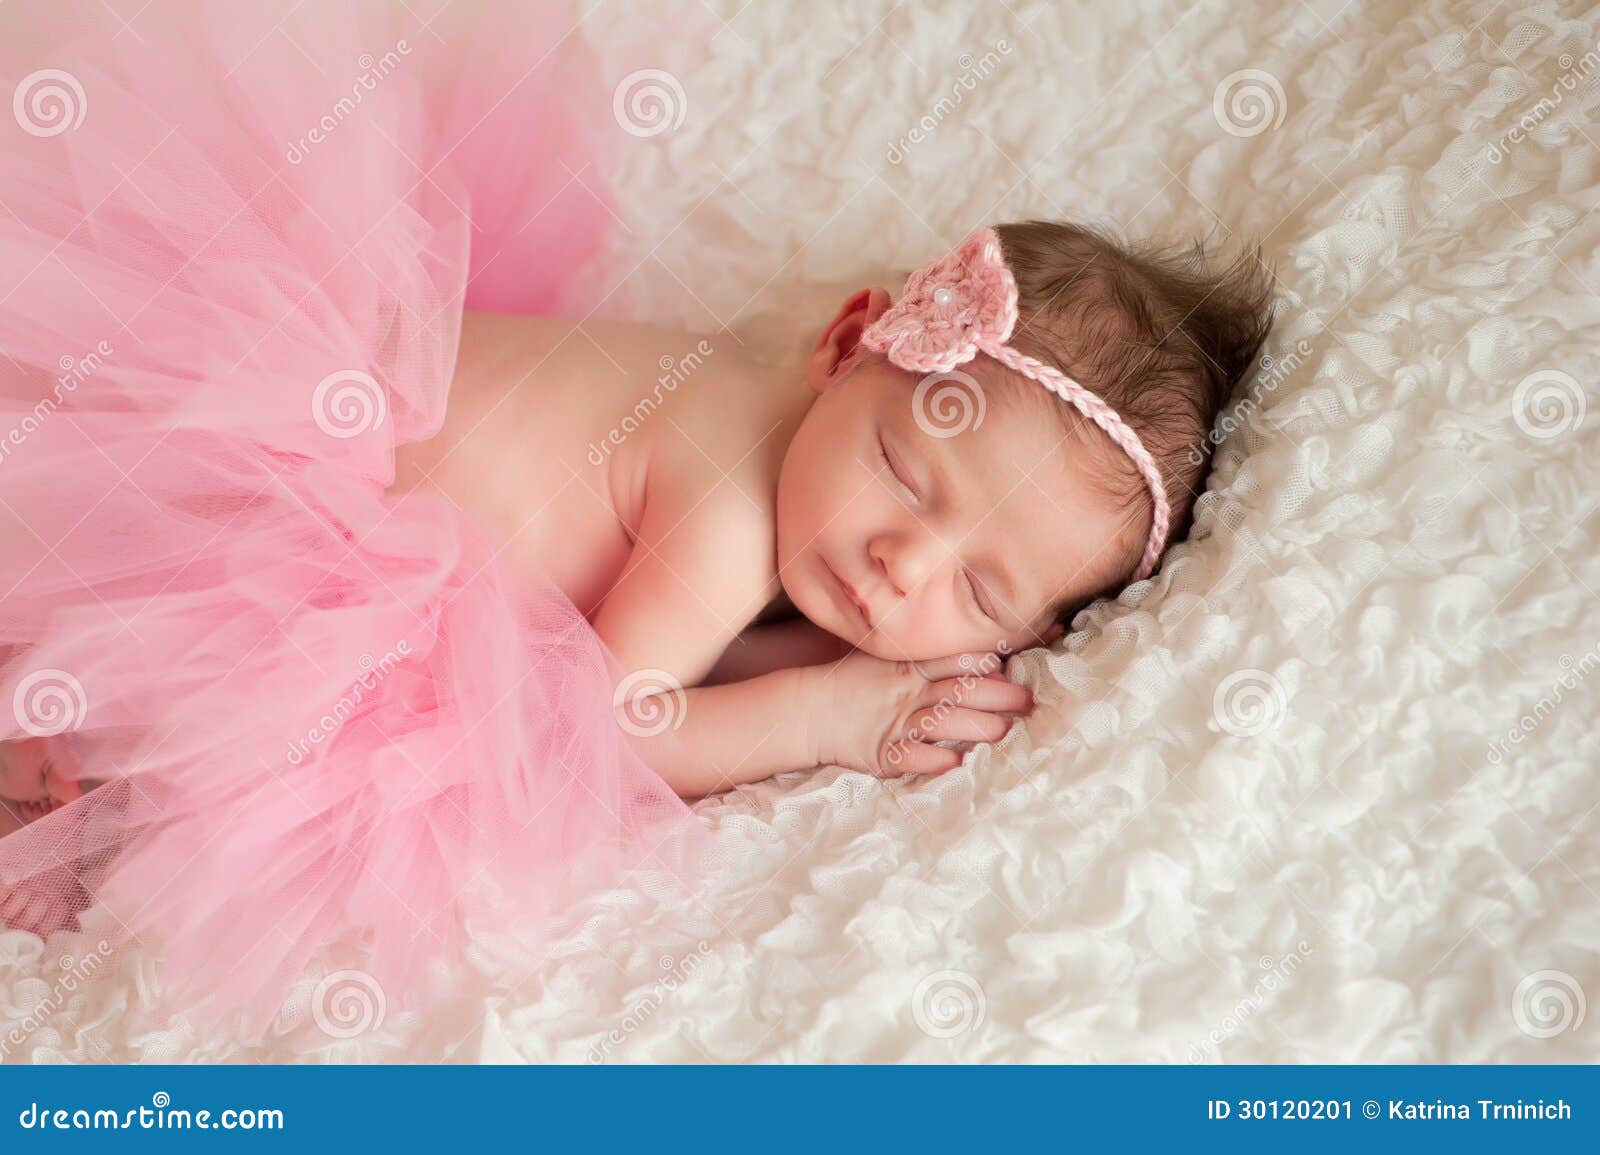 705 New baby headband subscription 433 Newborn baby girl wearing a pink crocheted headband and tutu. She is   